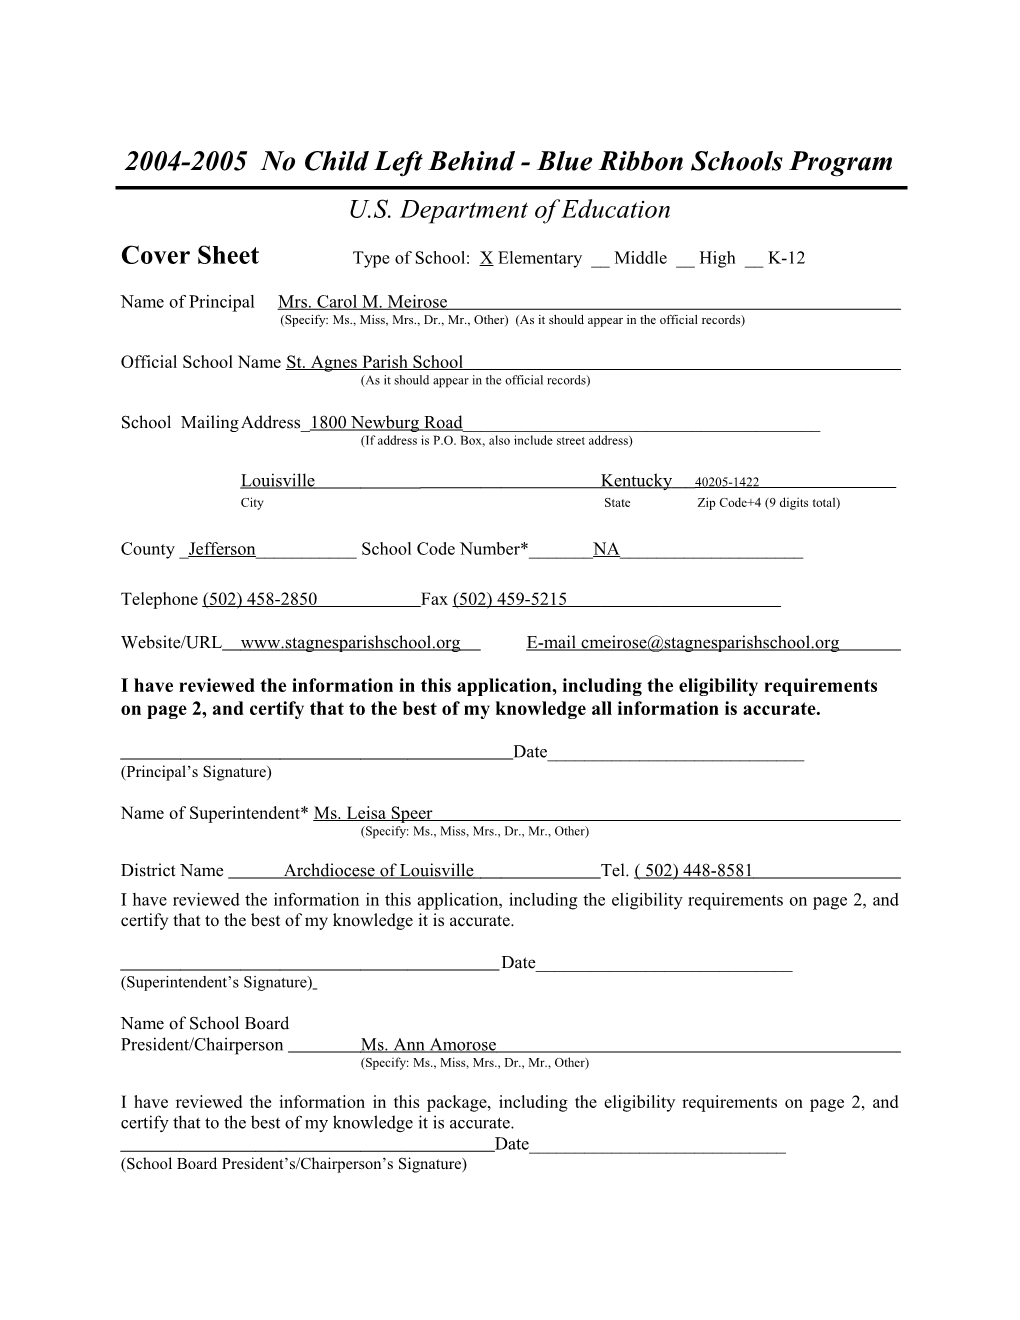 St. Agnes Parish School Application: 2004-2005, No Child Left Behind - Blue Ribbon Schools